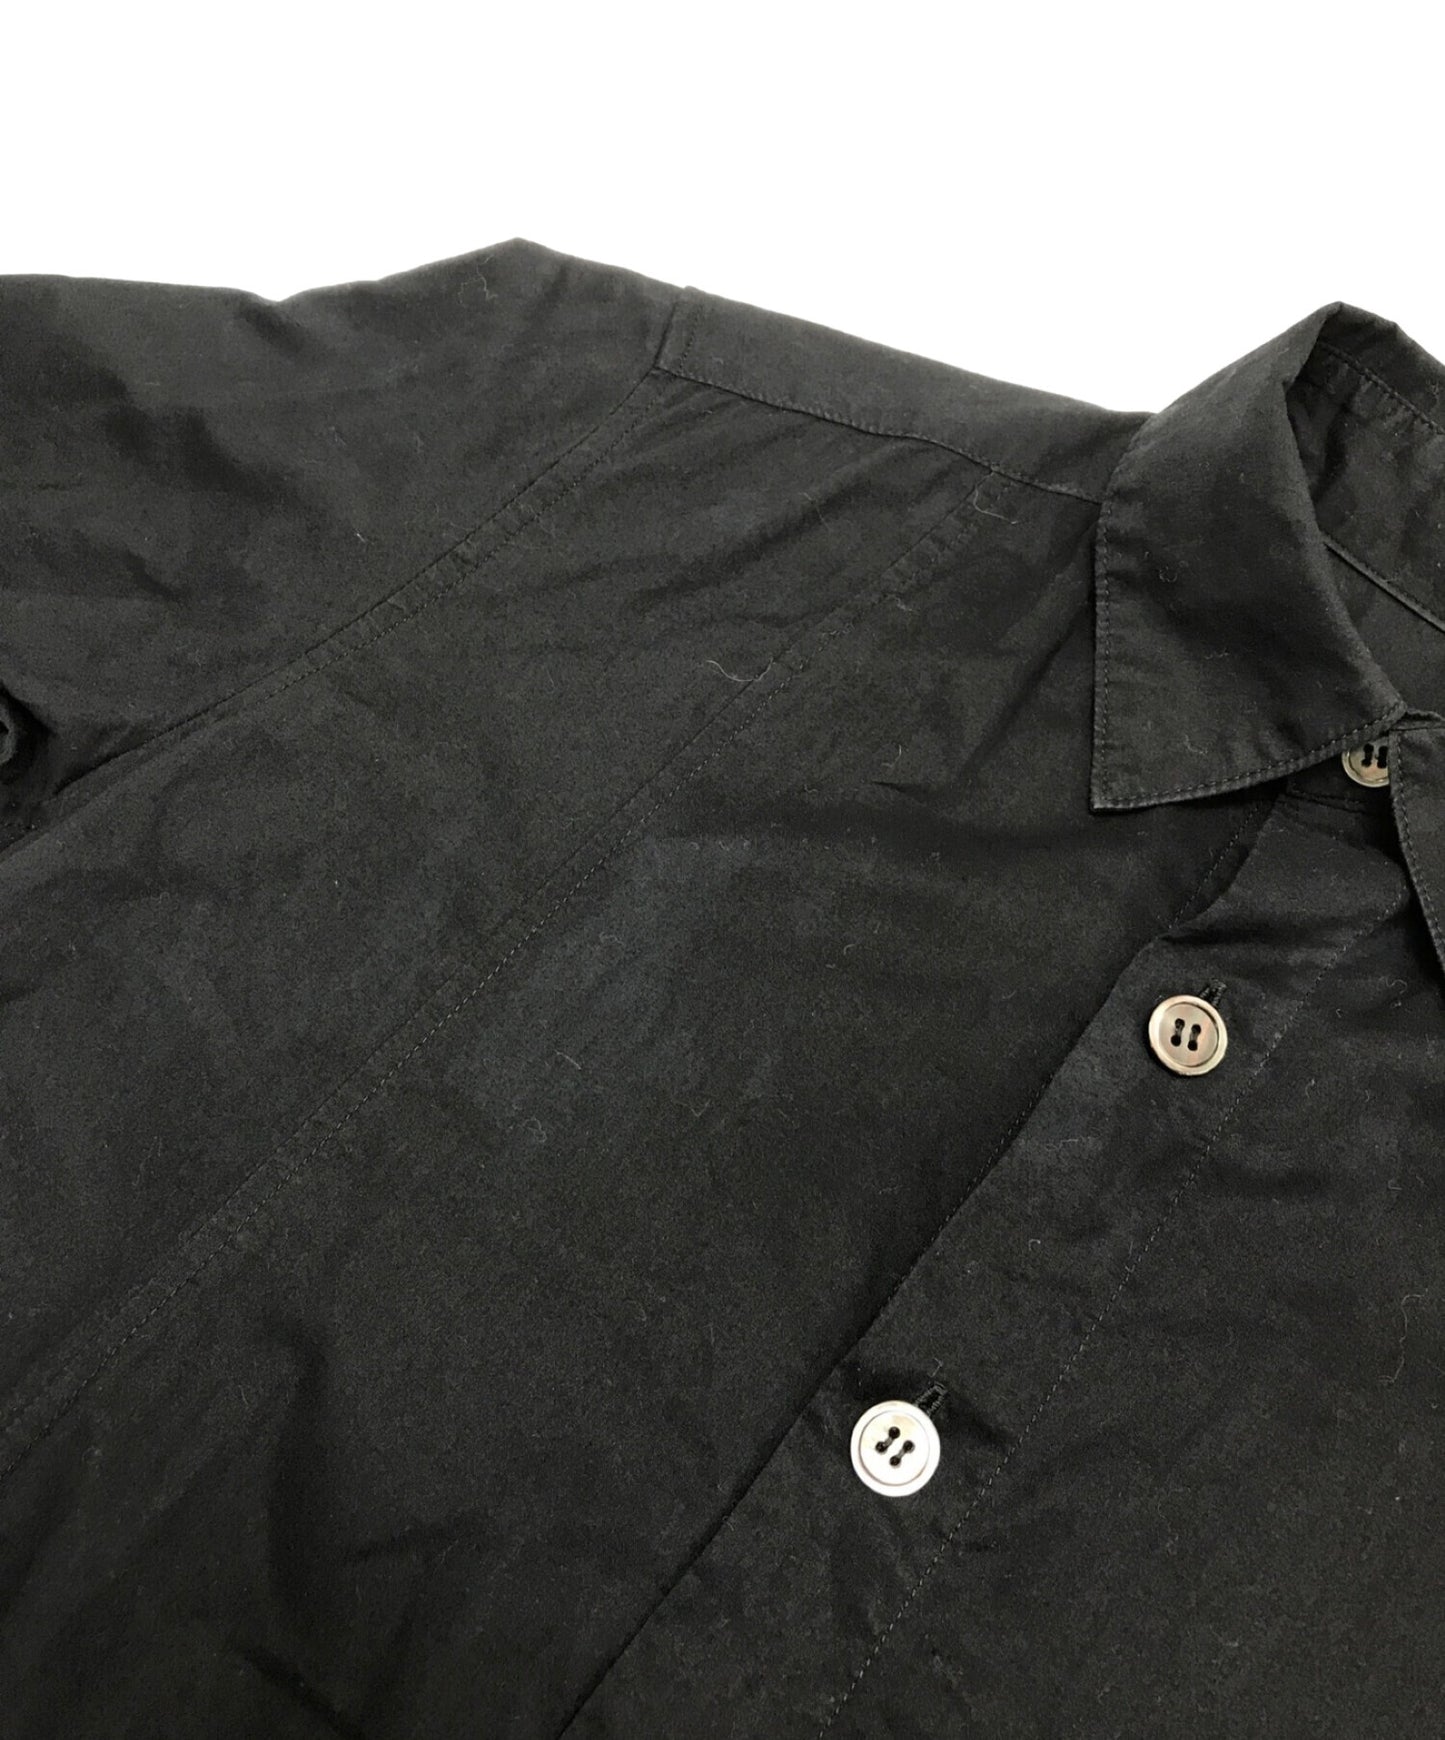 [Pre-owned] Y's Long Shirts / Long Sleeve Shirts / Design Shirts / Blouses / Solid Shirts YX-B08-001